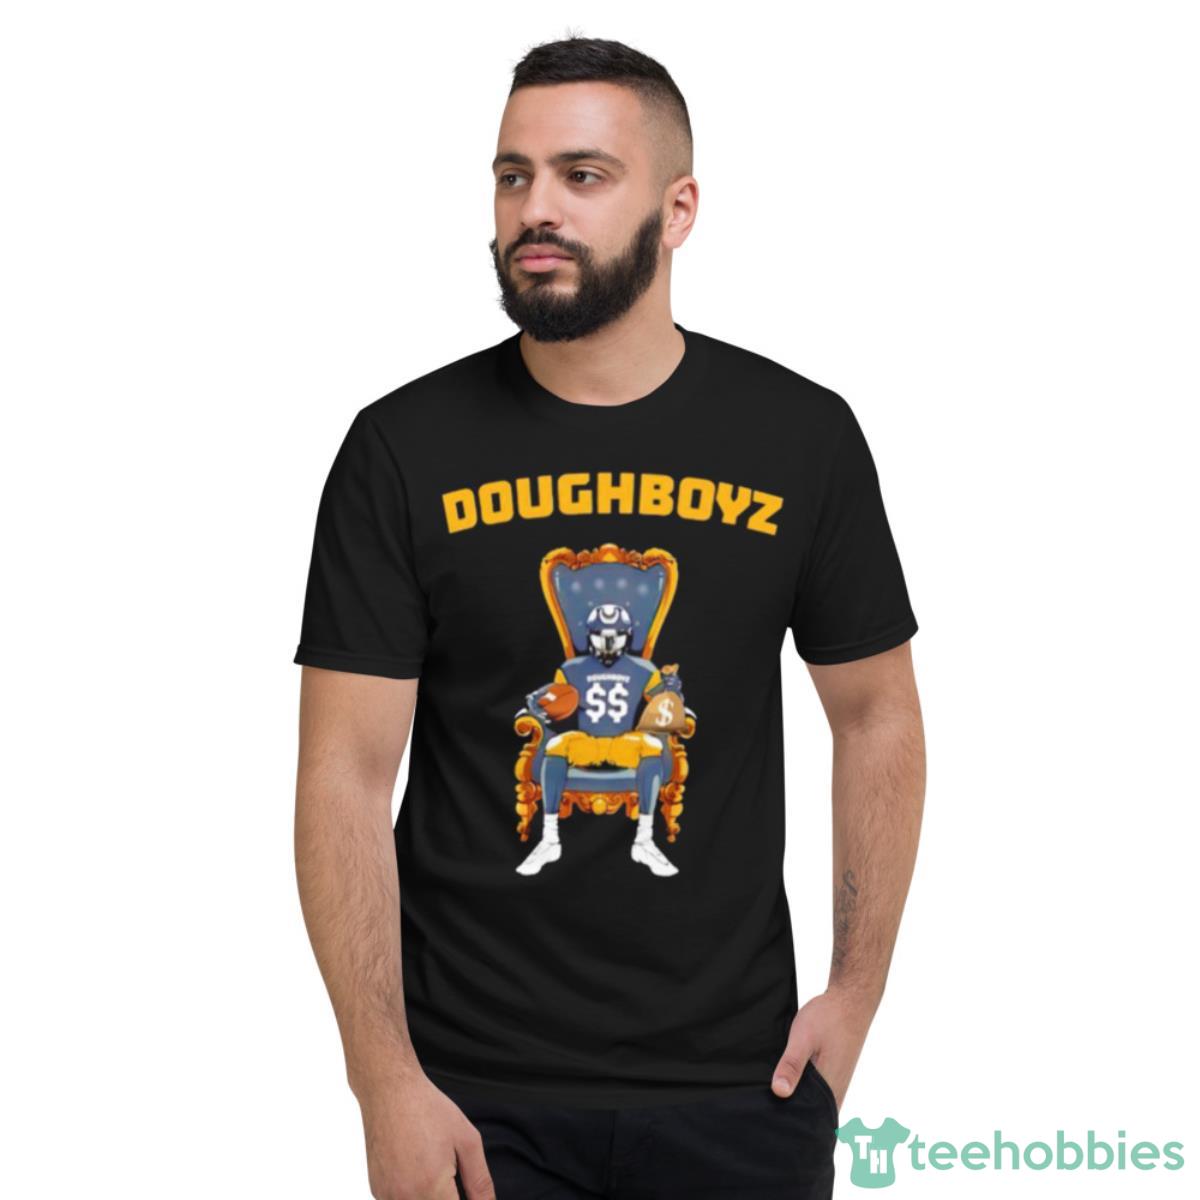 Iowa Hawkeyes Doughboyz Shirt - Short Sleeve T-Shirt